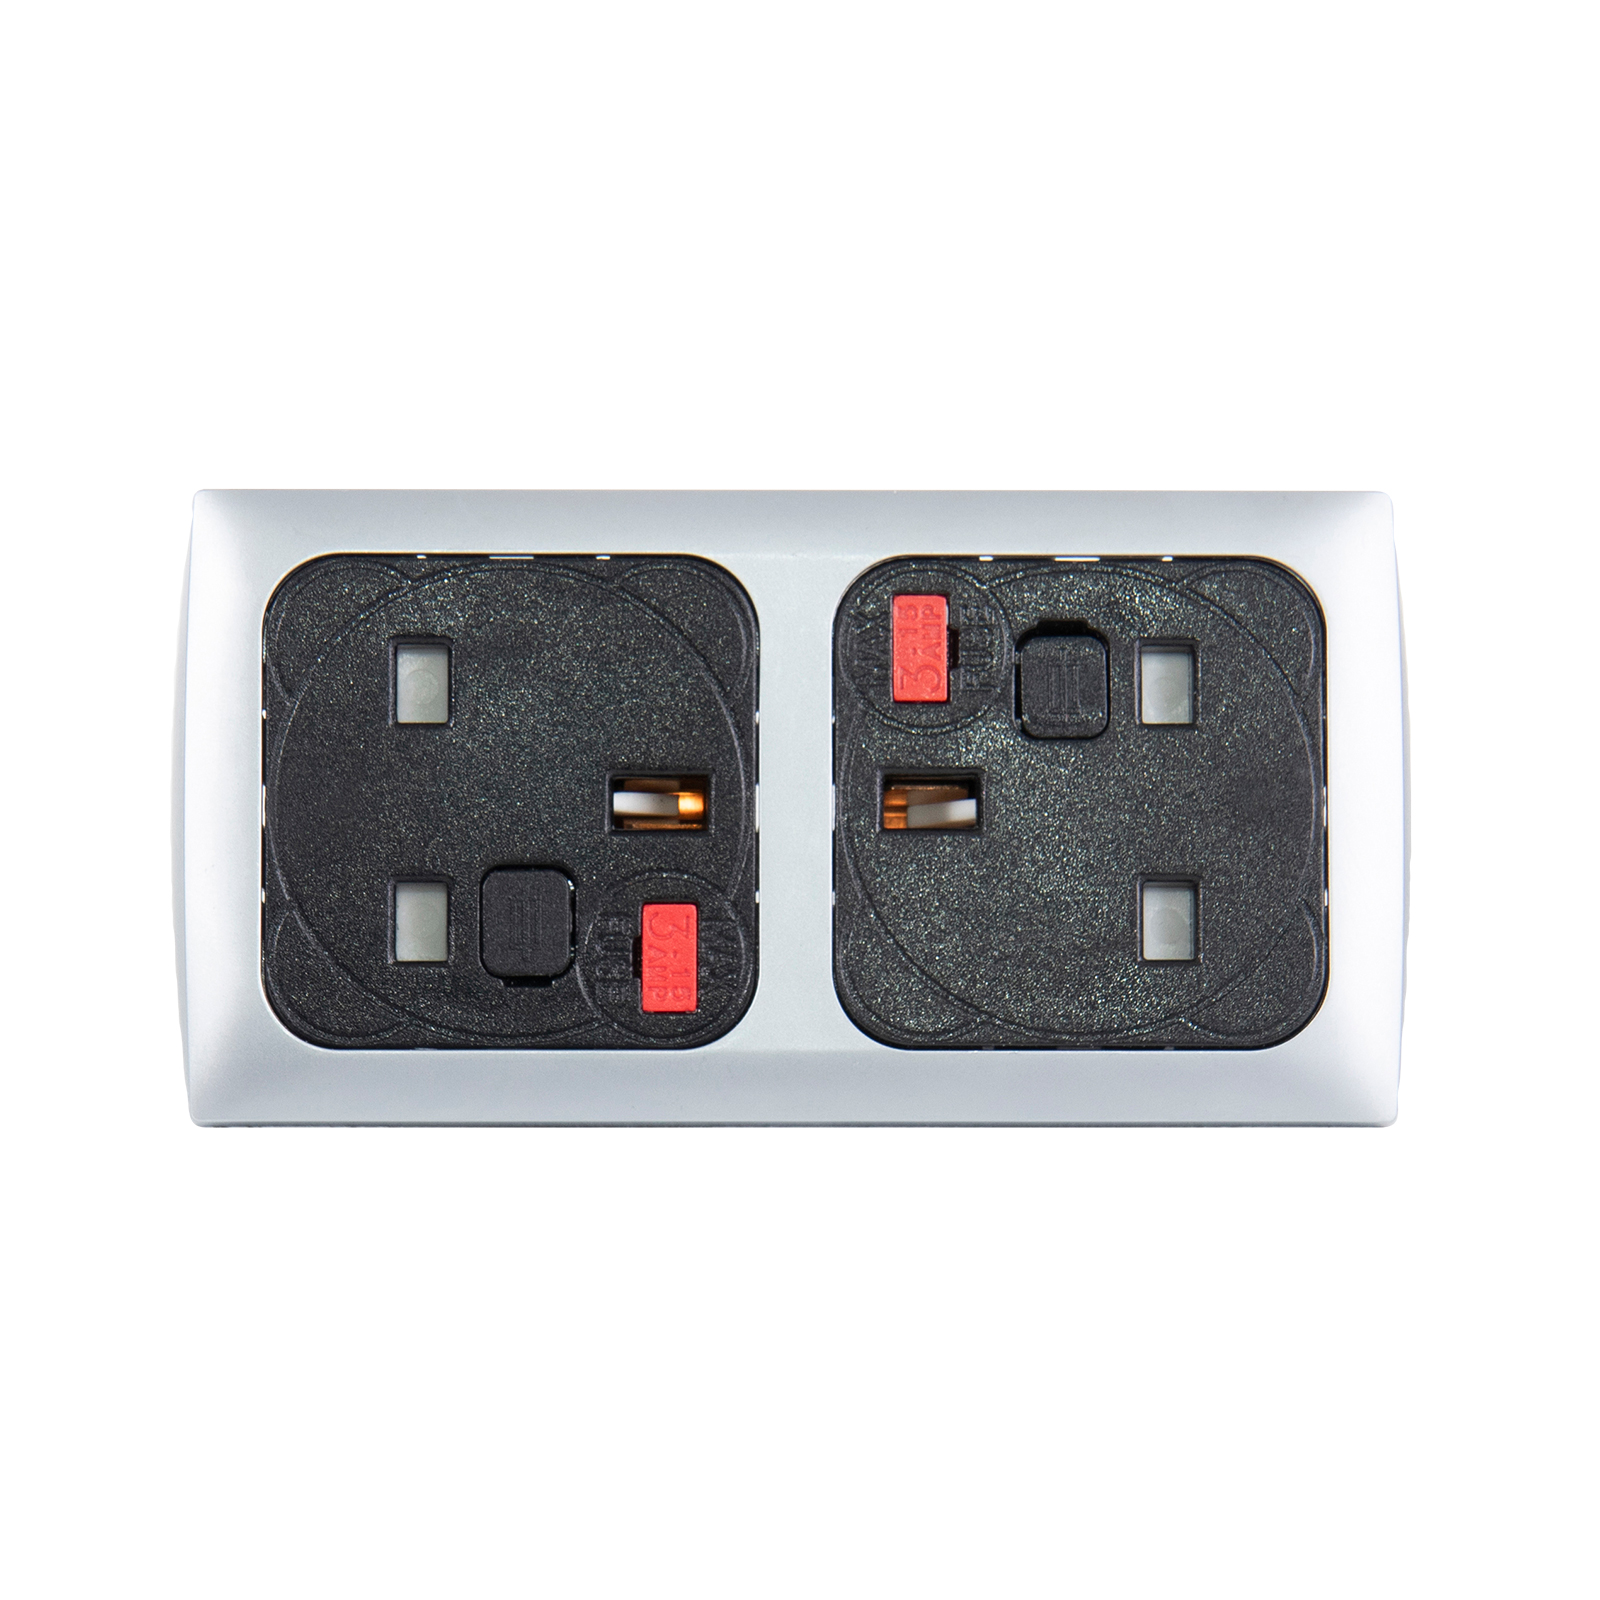 Plug Socket Proton panel mounted power module 2 x UK sockets - silver/black